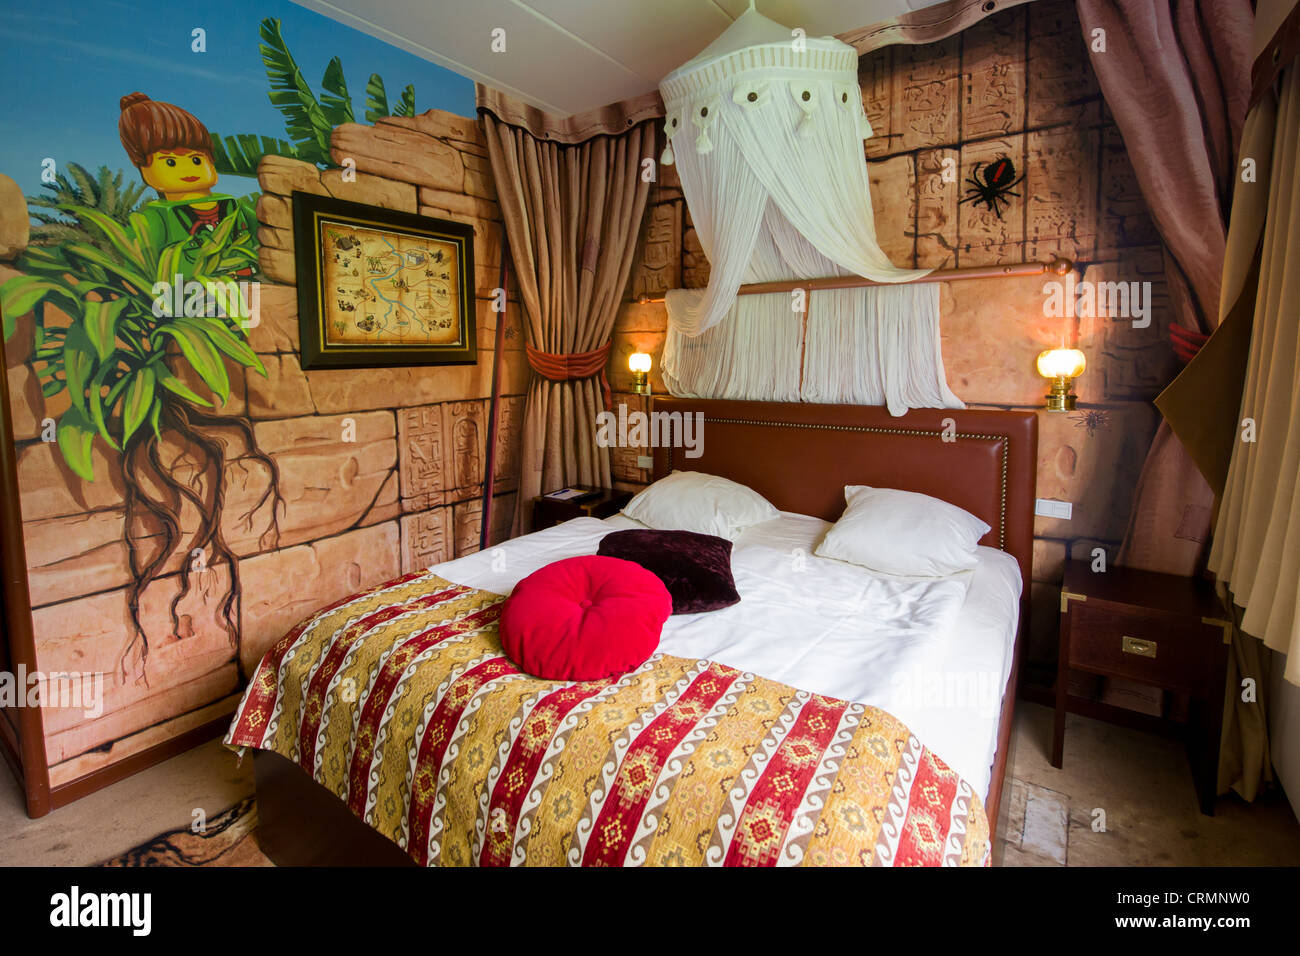 Interior of adventure themed room at the Hotel Legoland, Legoland, Billund,  Denmark Stock Photo - Alamy